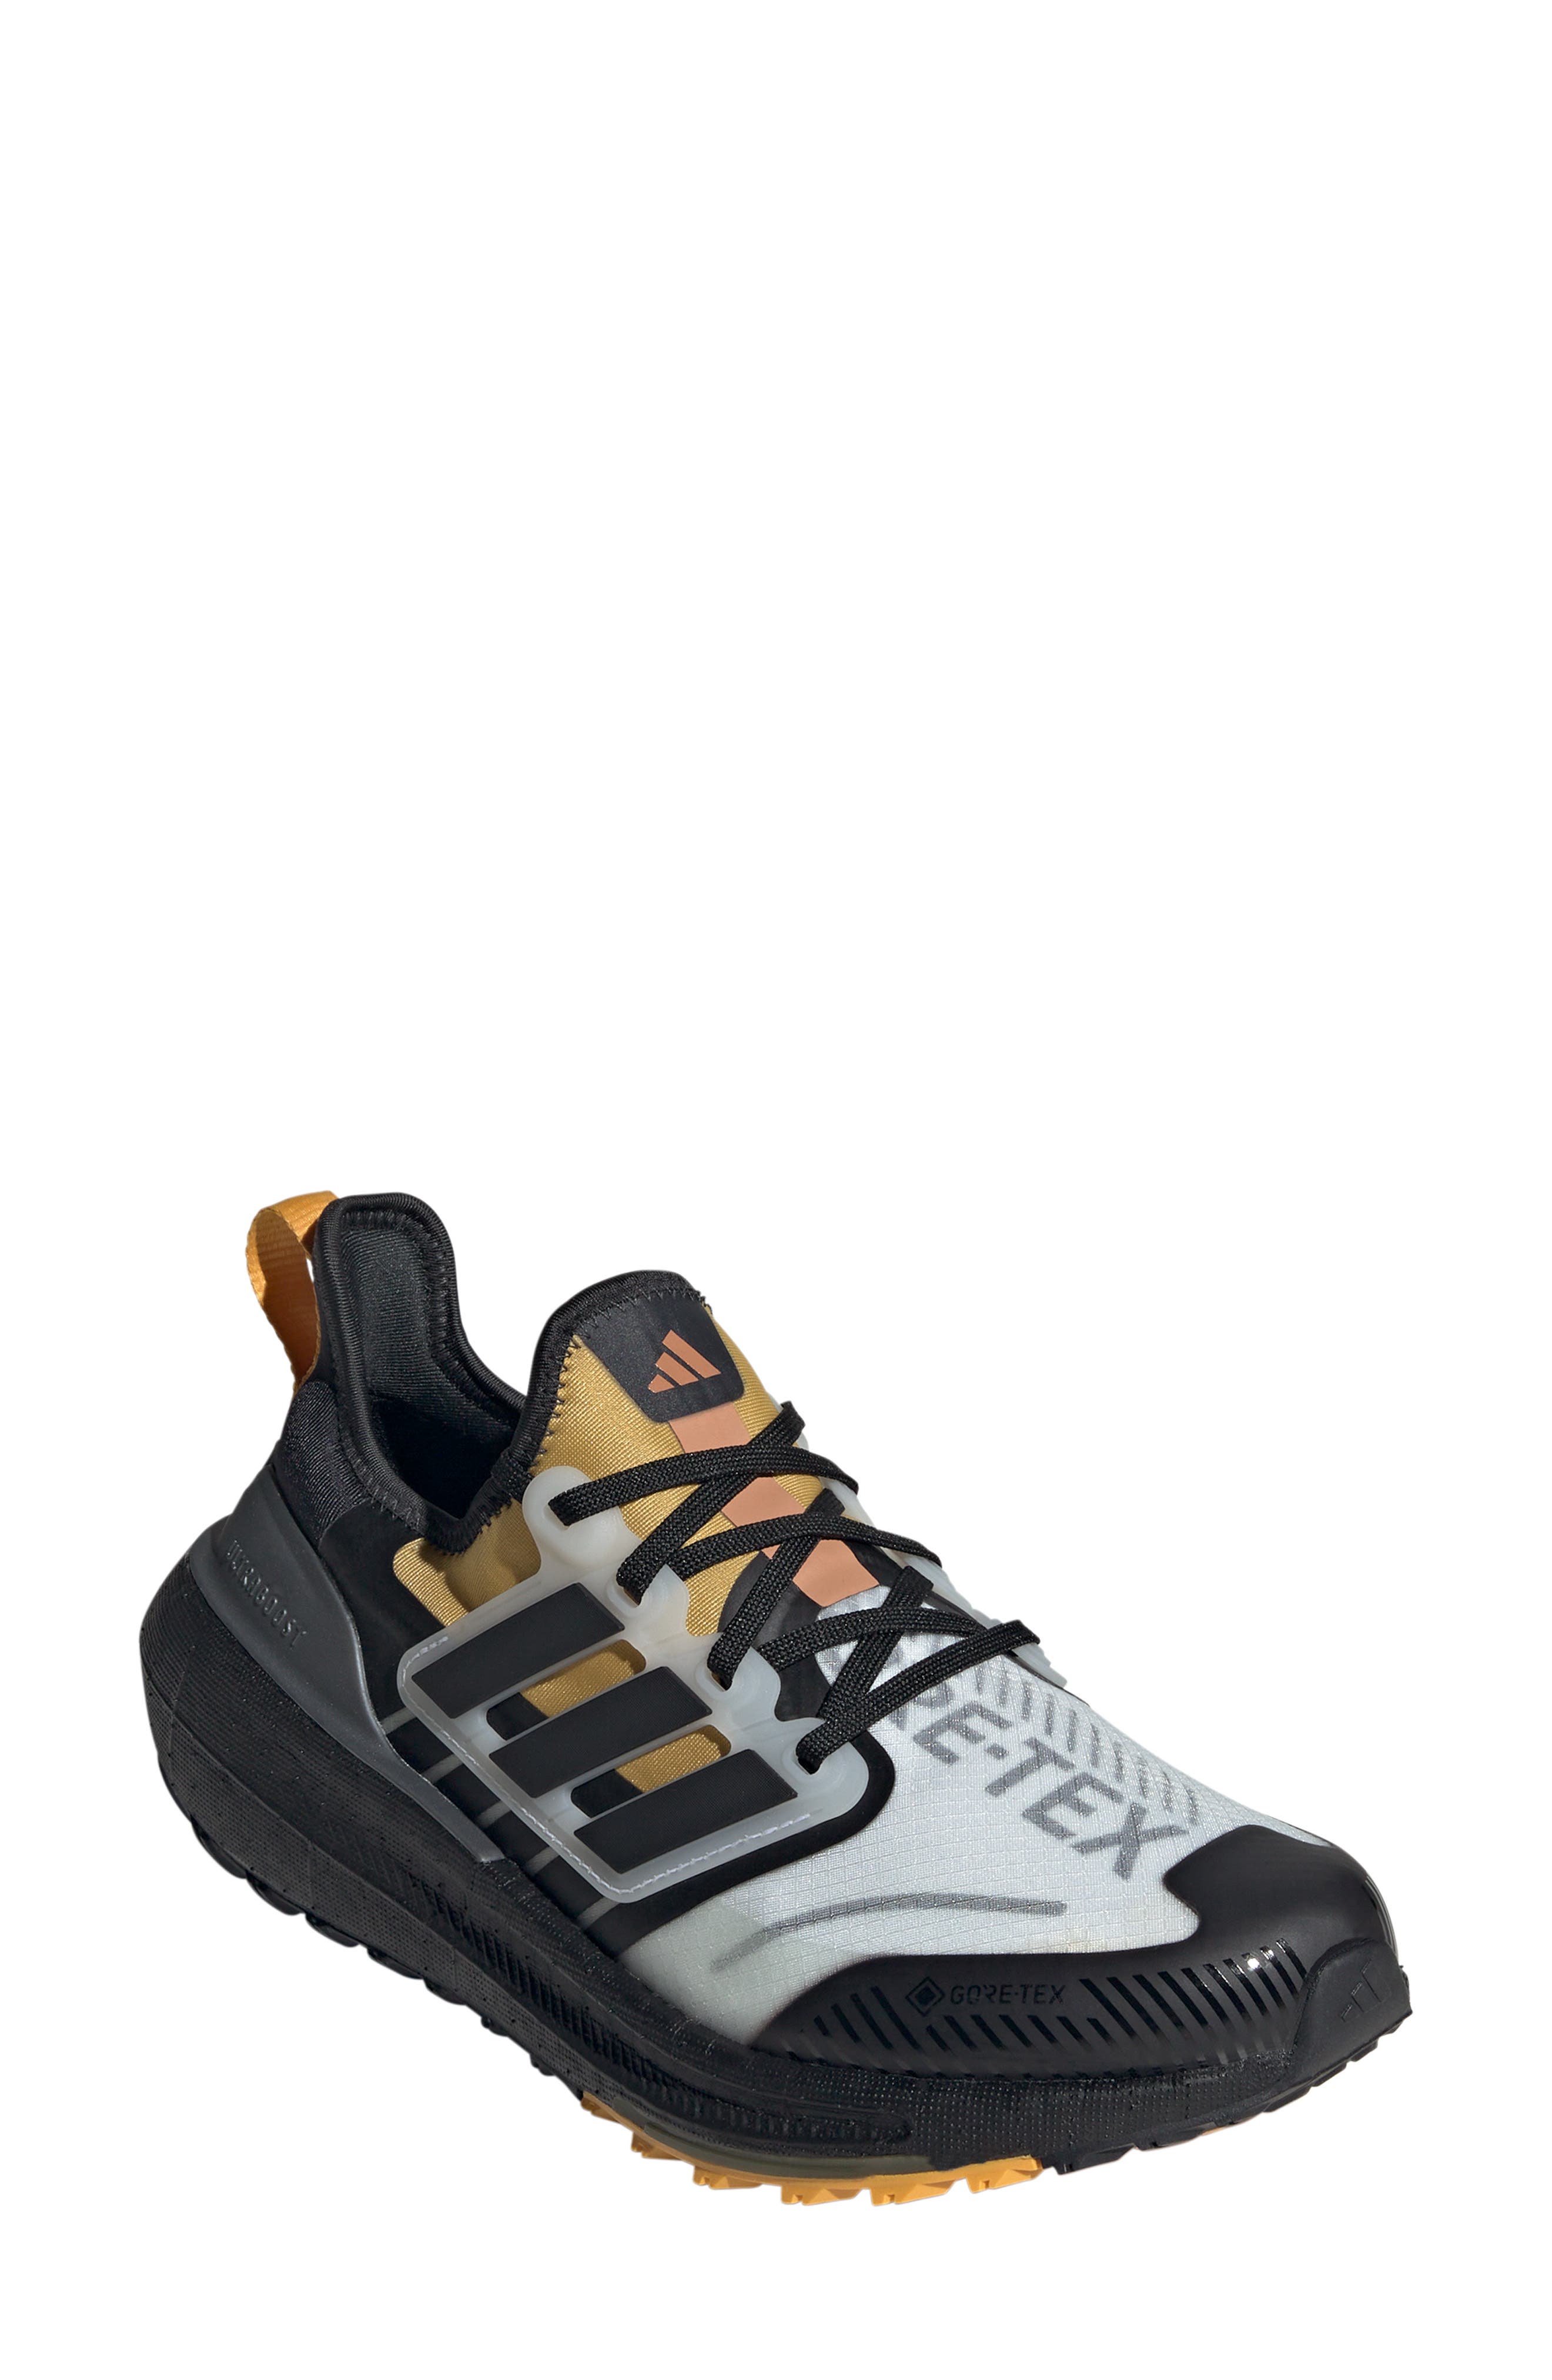 adidas goretex running shoes